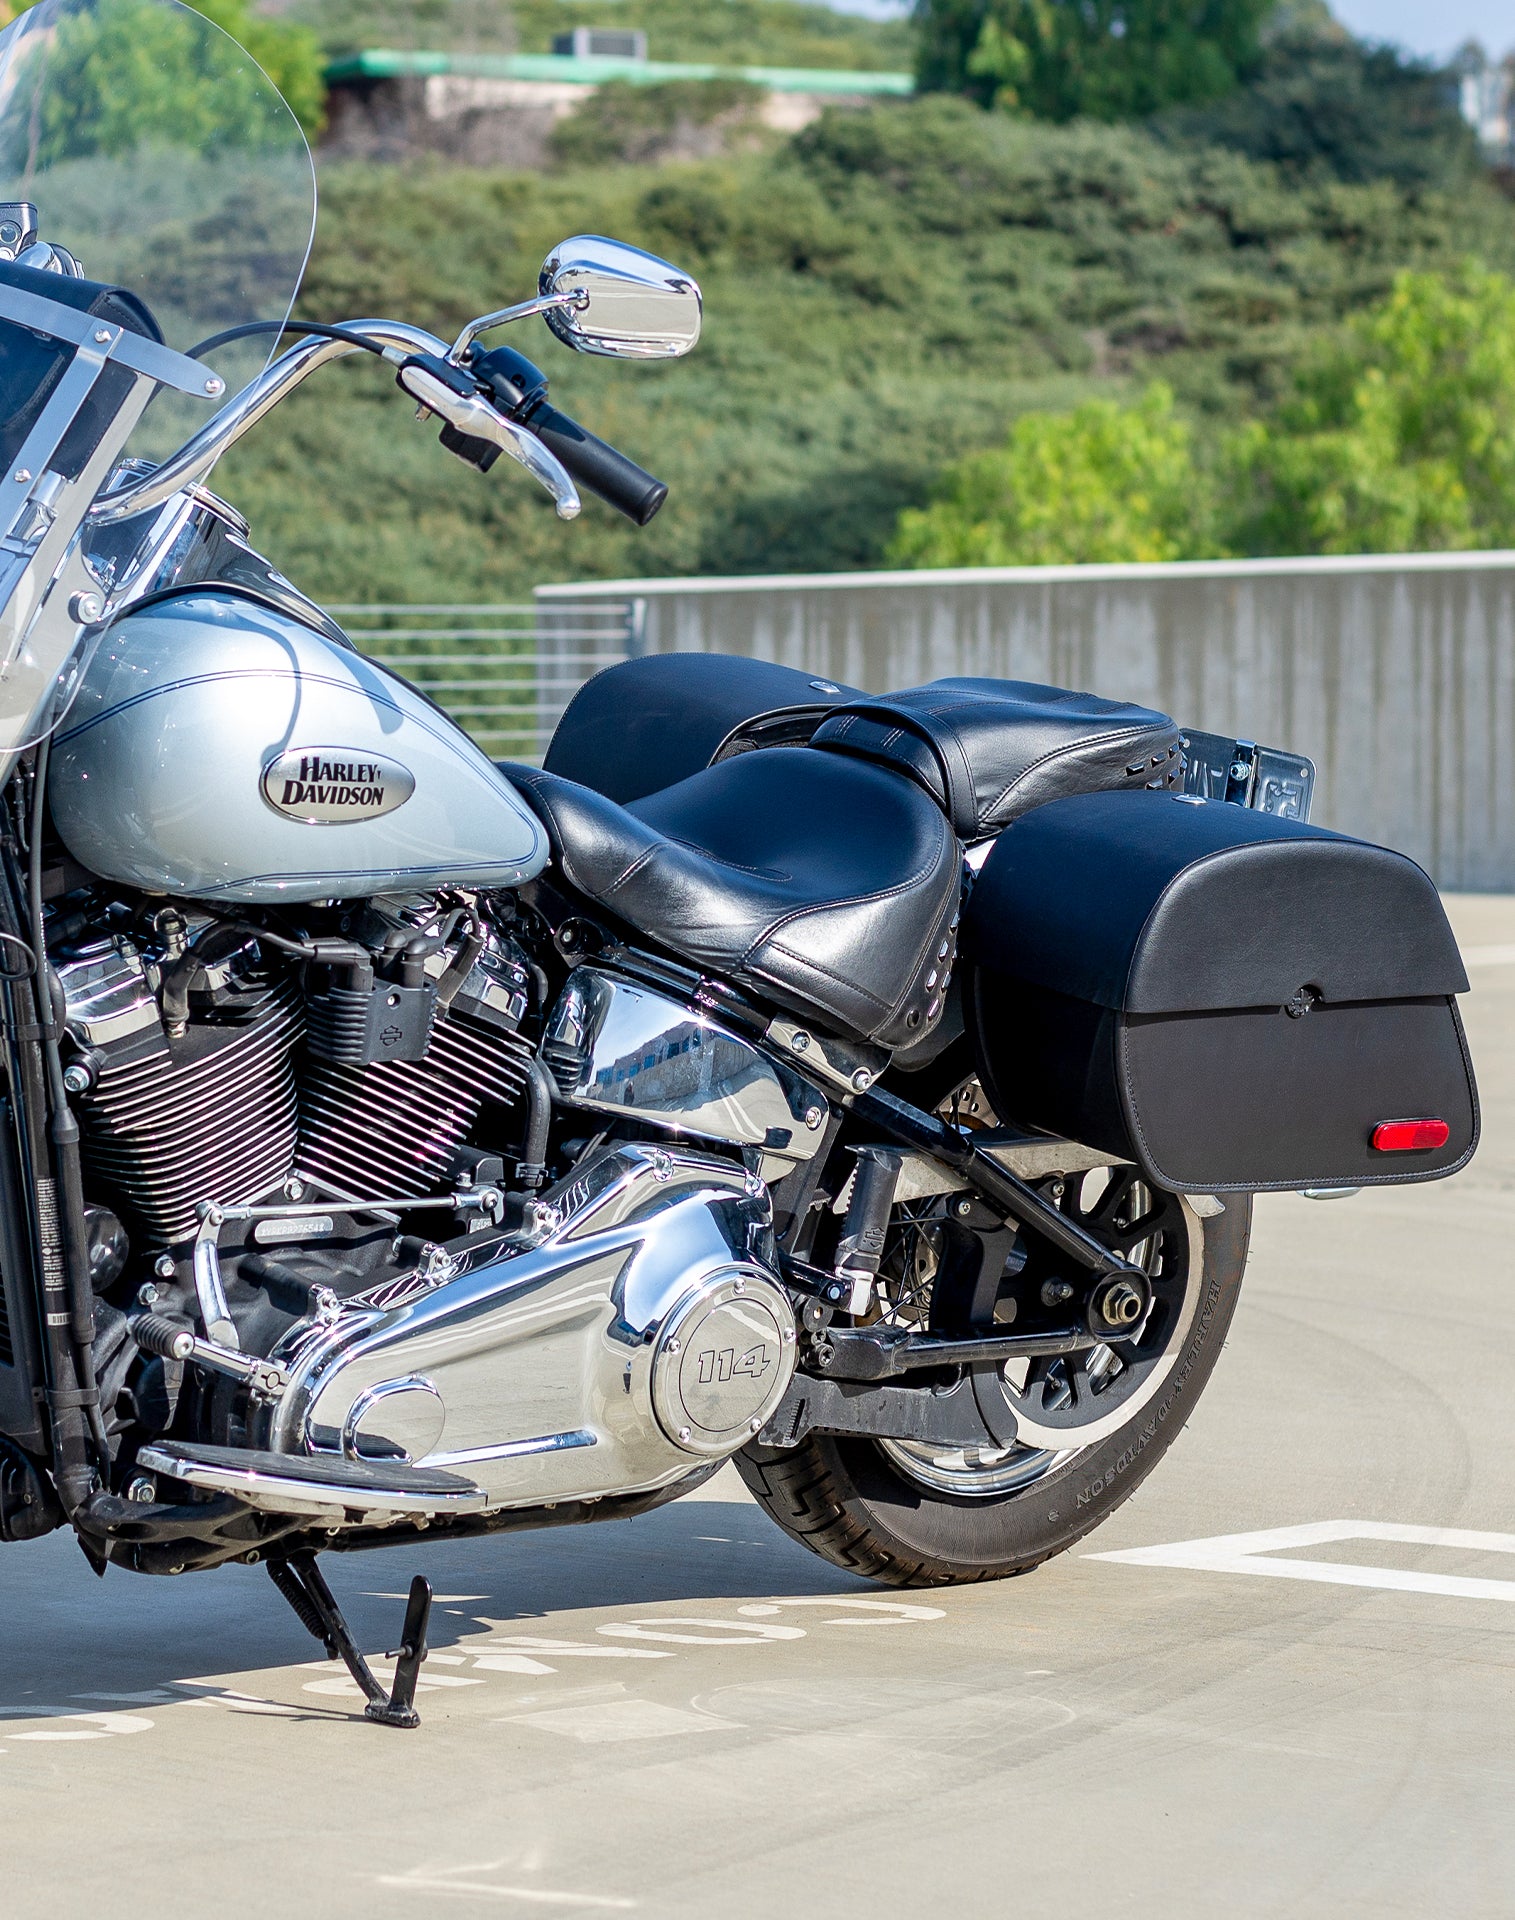 Viking Panzer Medium Leather Motorcycle Saddlebags For Harley Davidson Softail Heritage Flst I C Ci are Key lockable